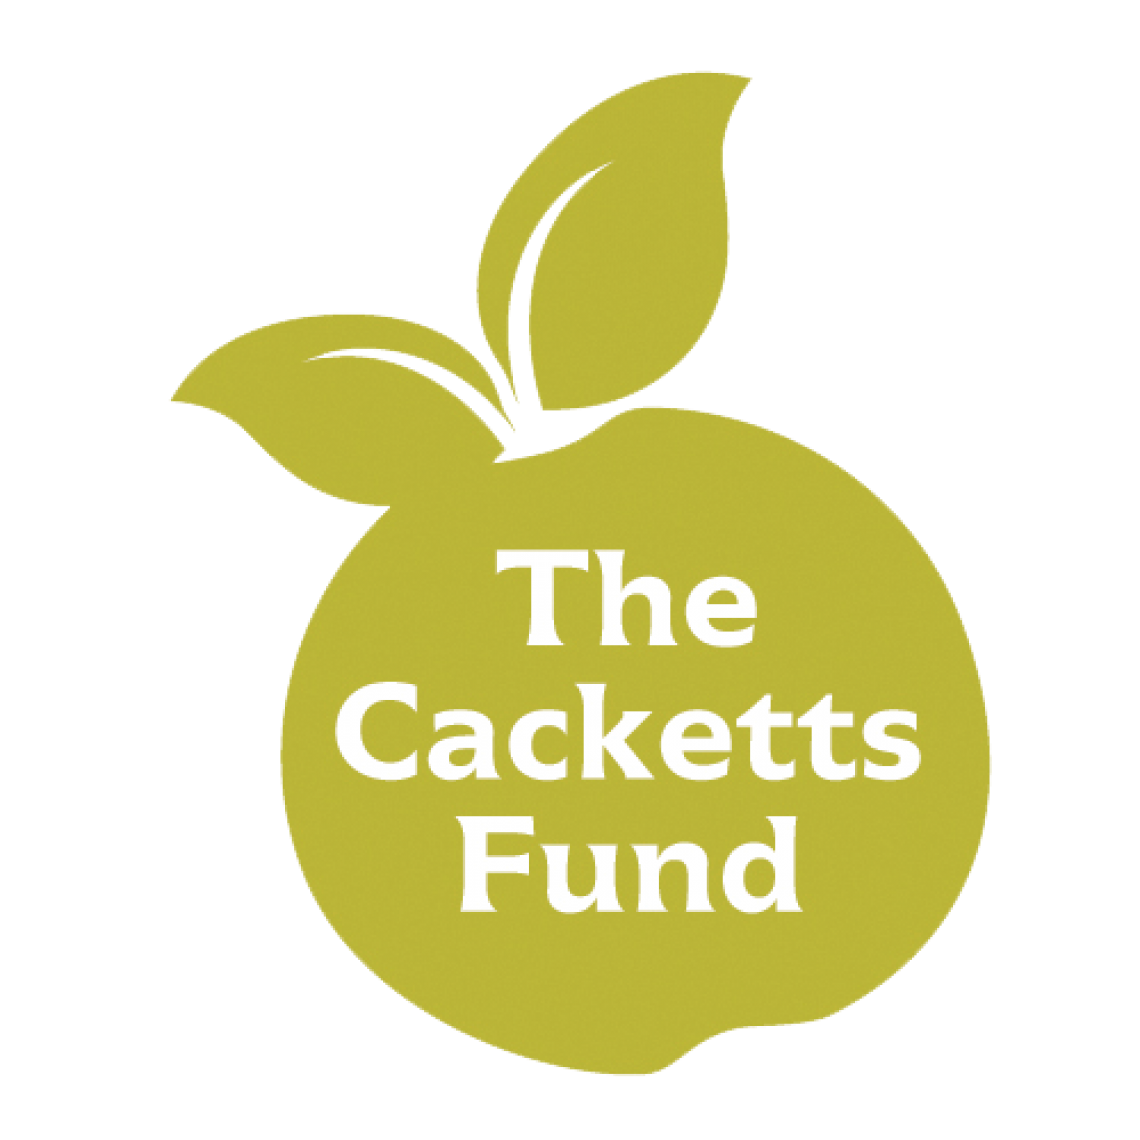 The Cacketts Fund logo